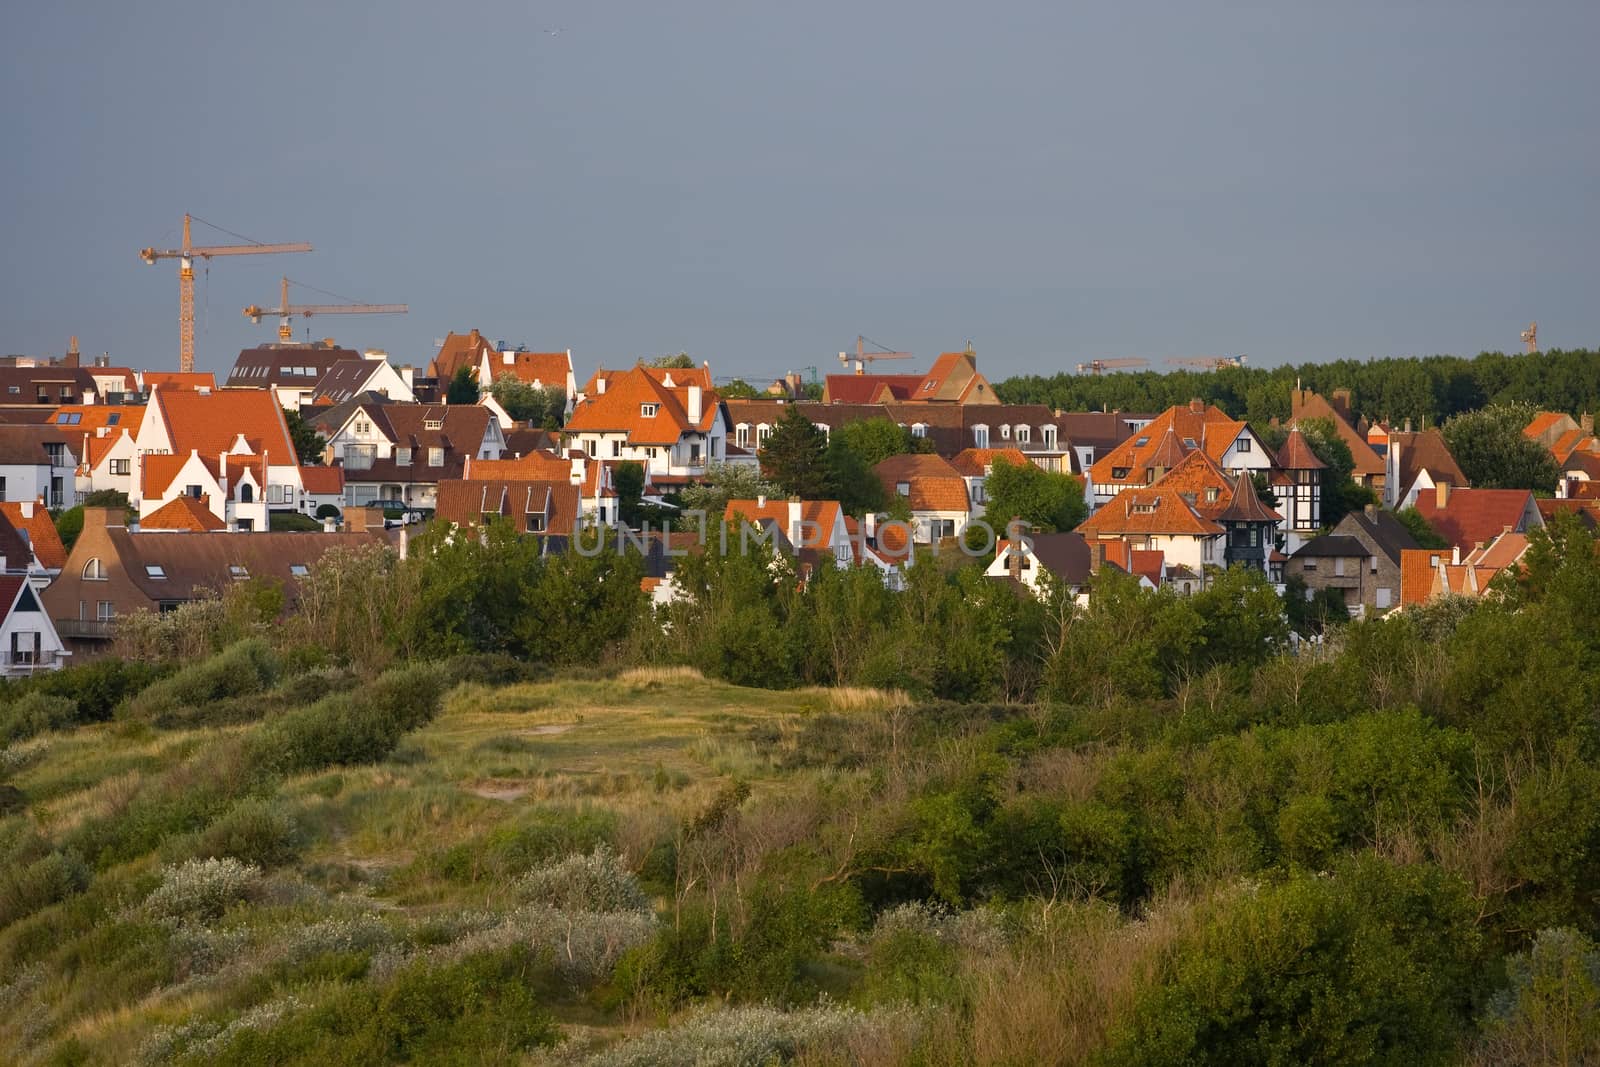 Landscape with flemish style houses